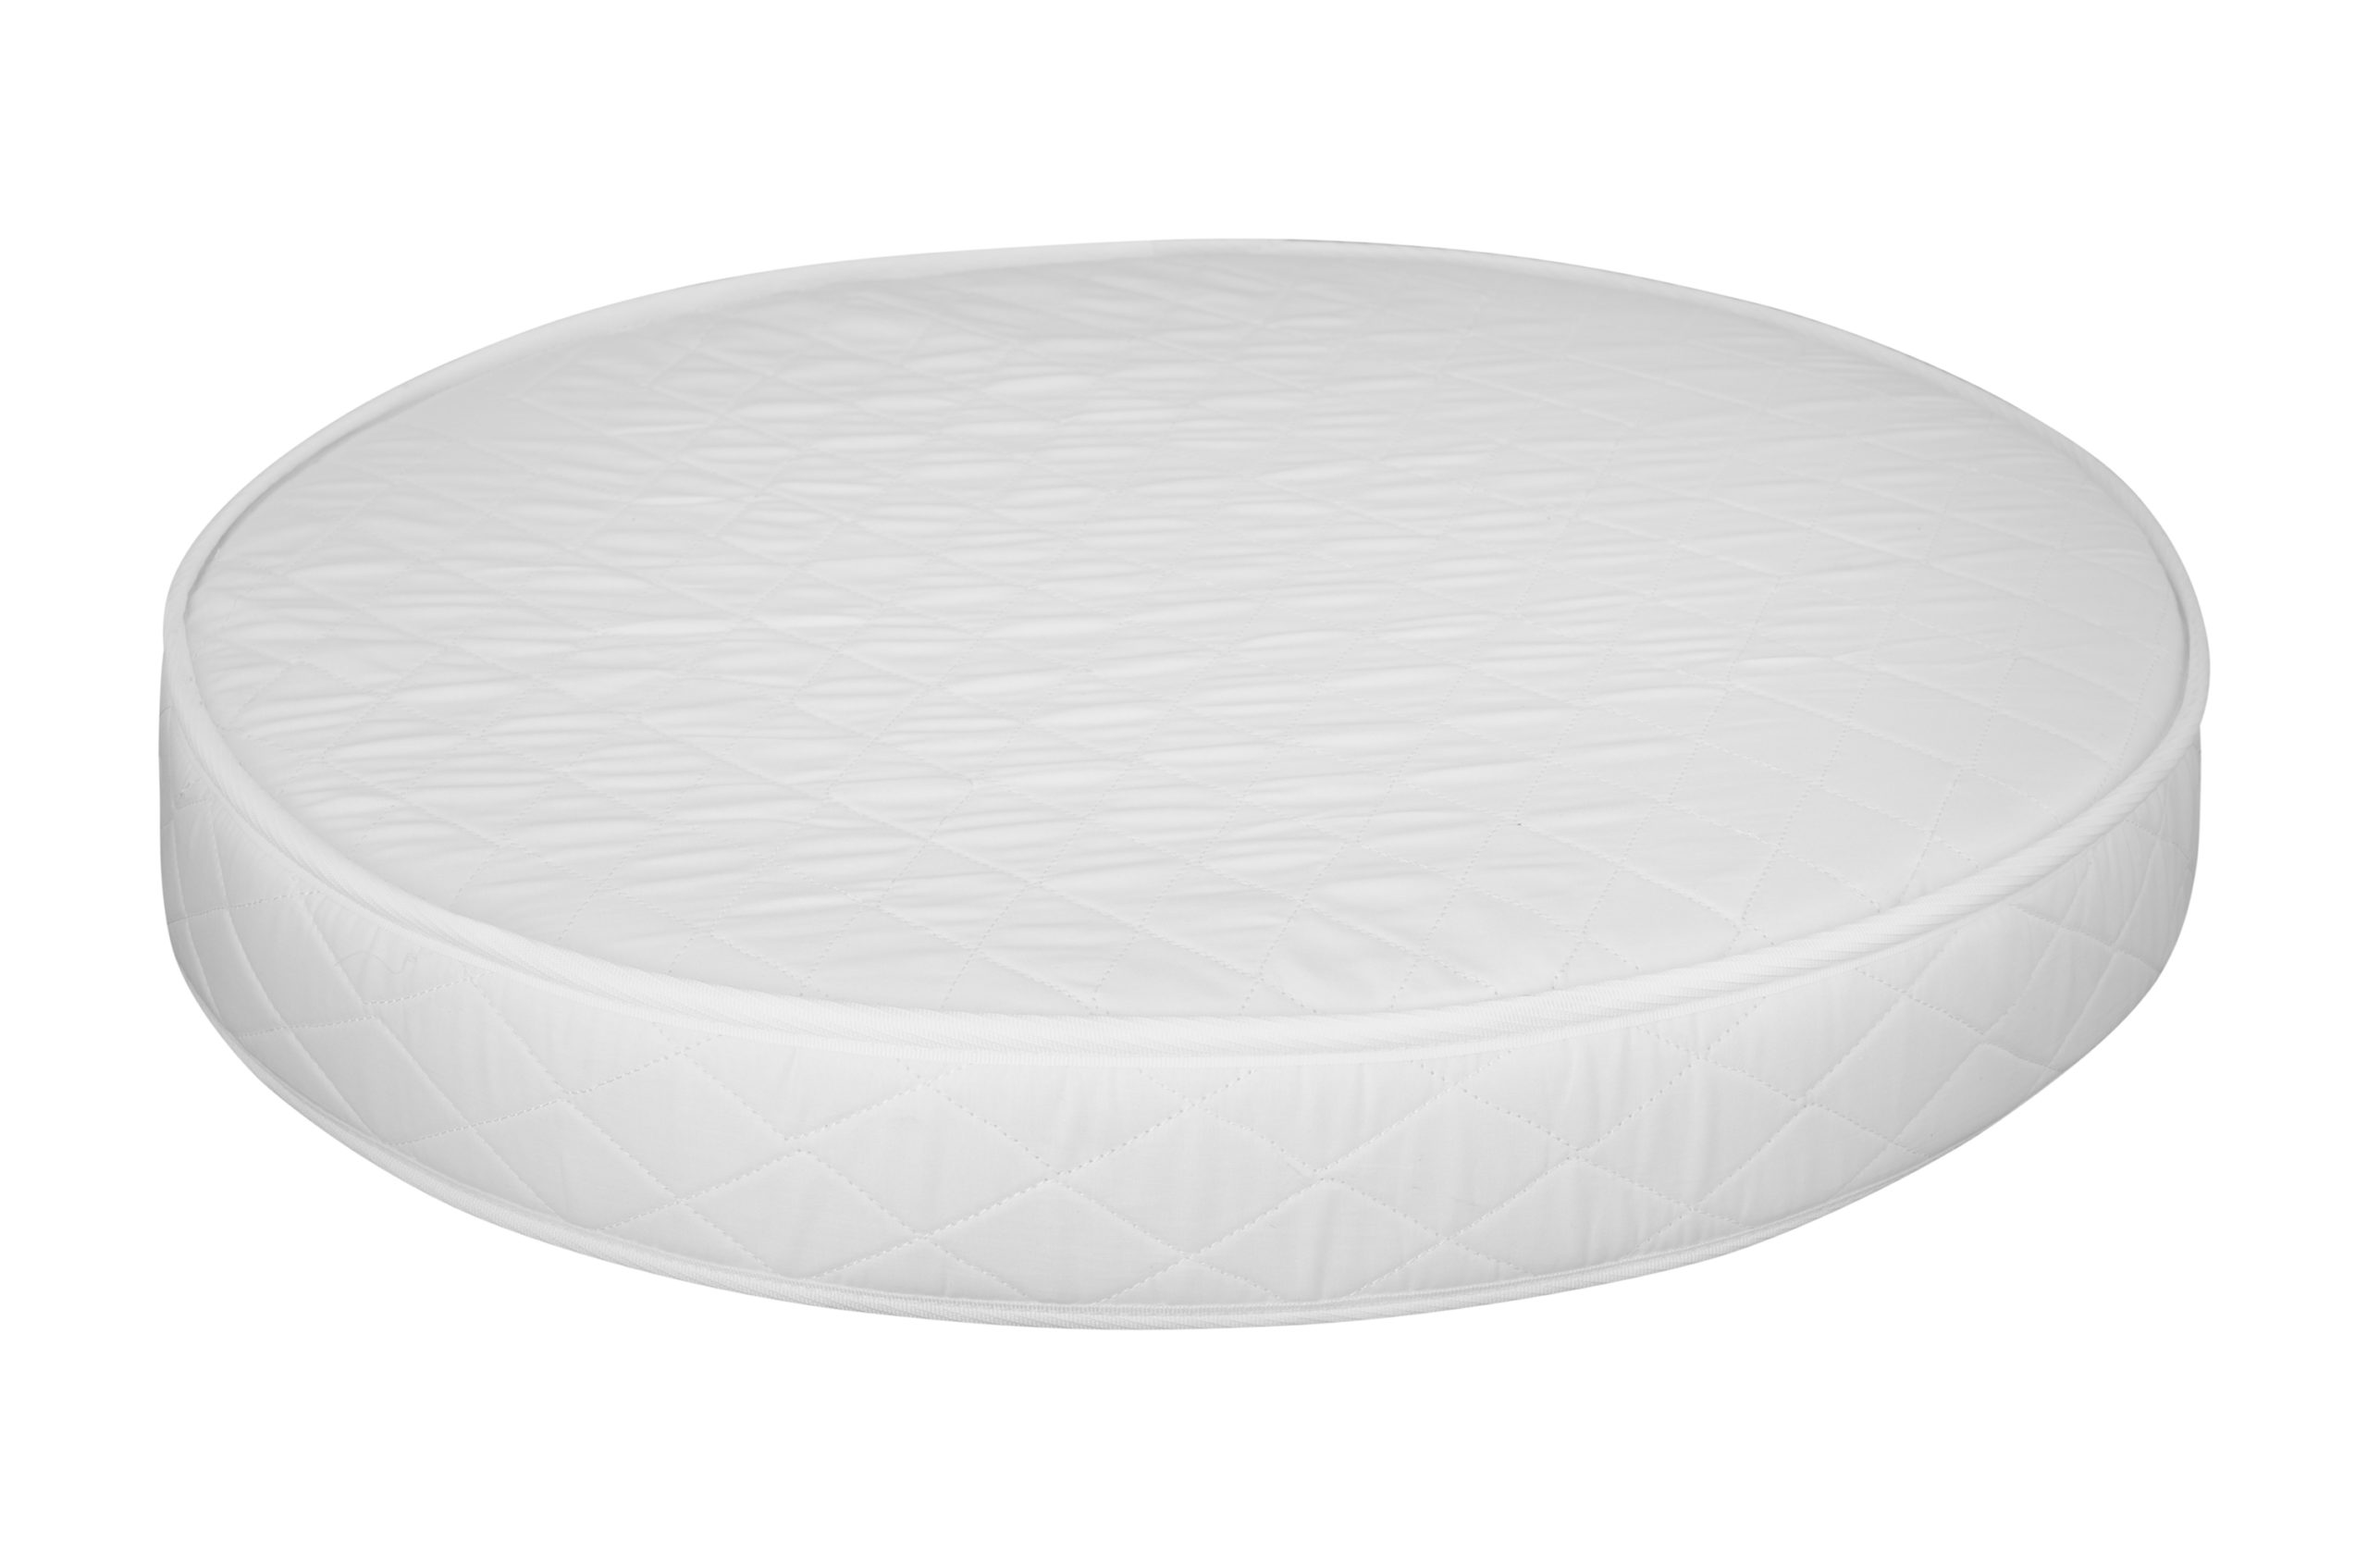 cocoon nest bassinet mattress size